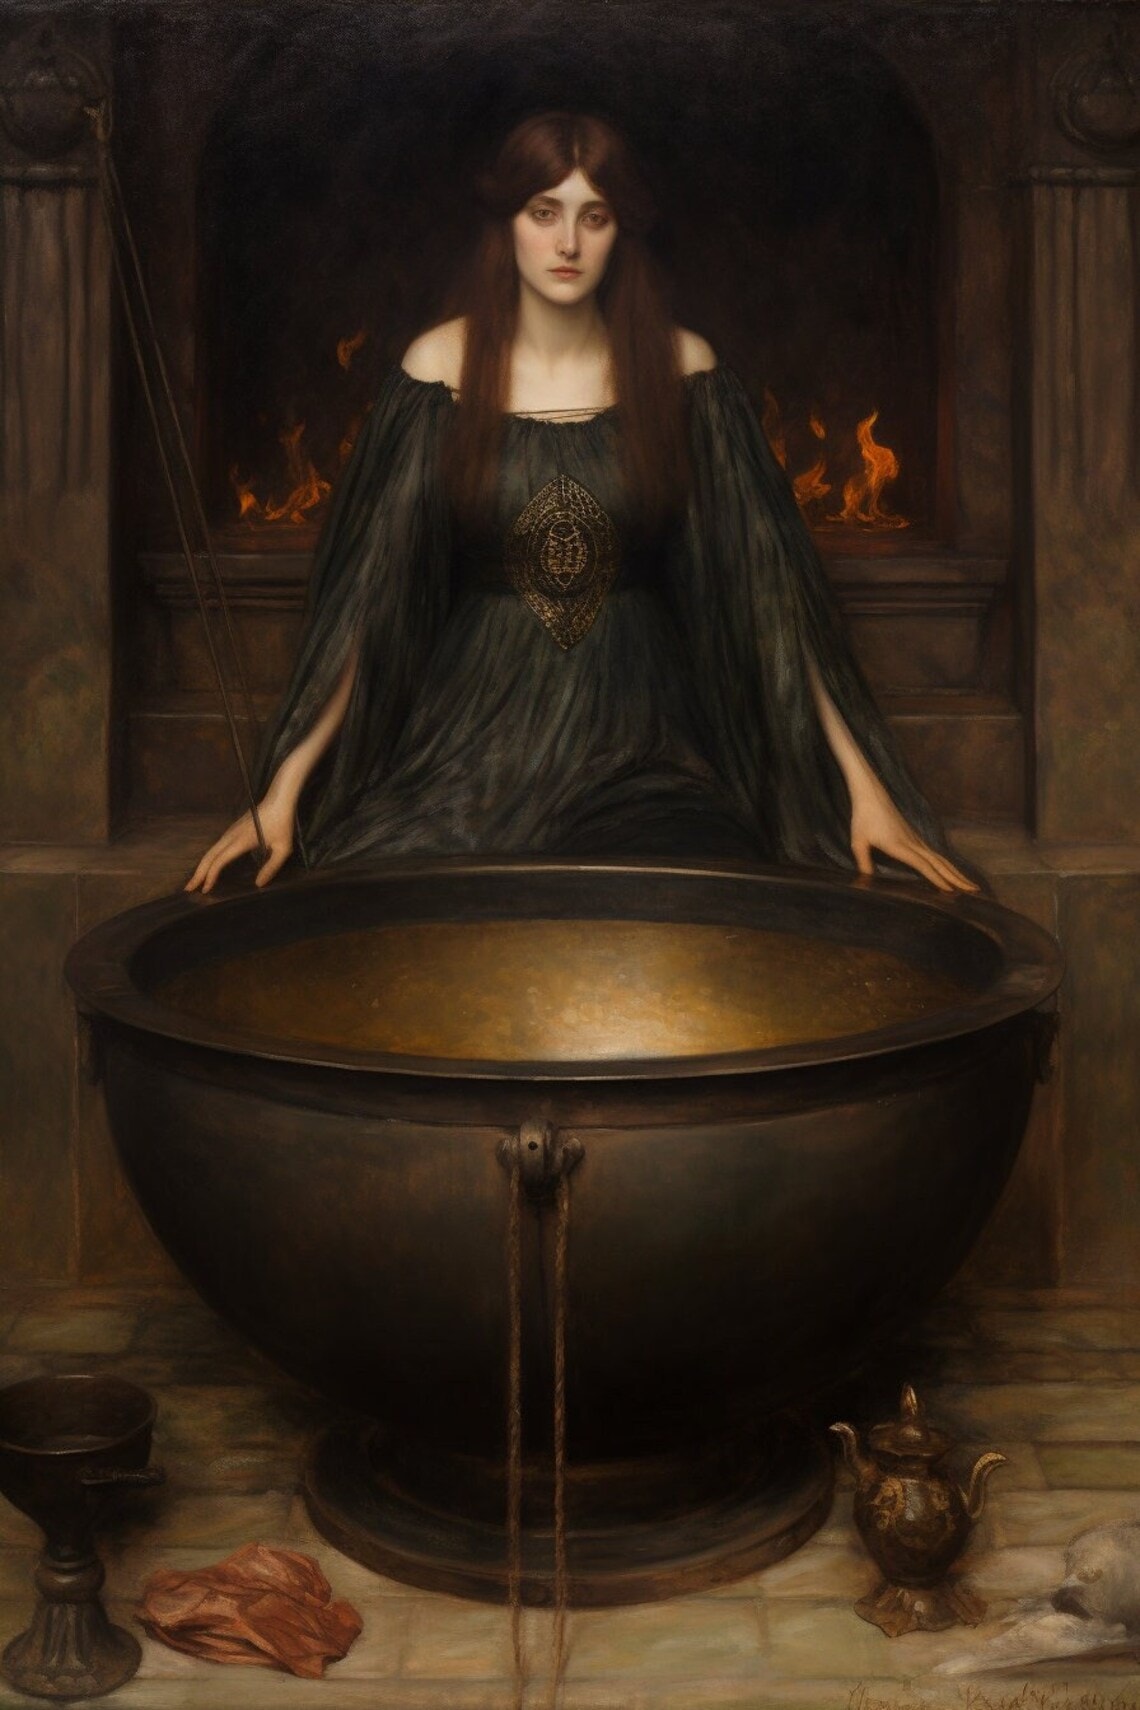 cerridwen and her cauldron